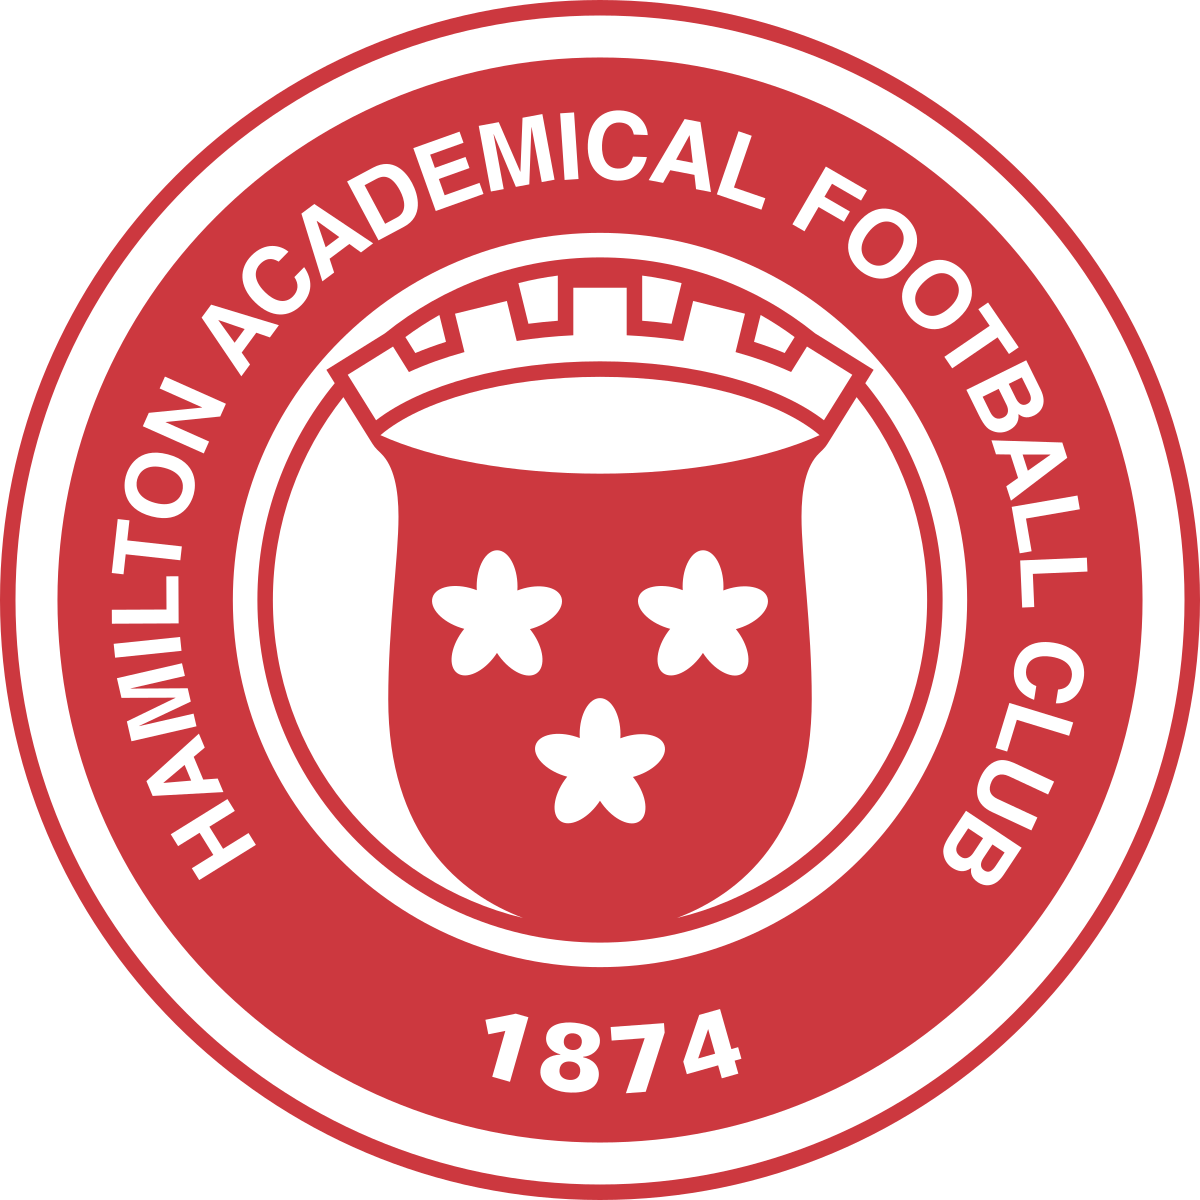 Hamilton Academical team logo